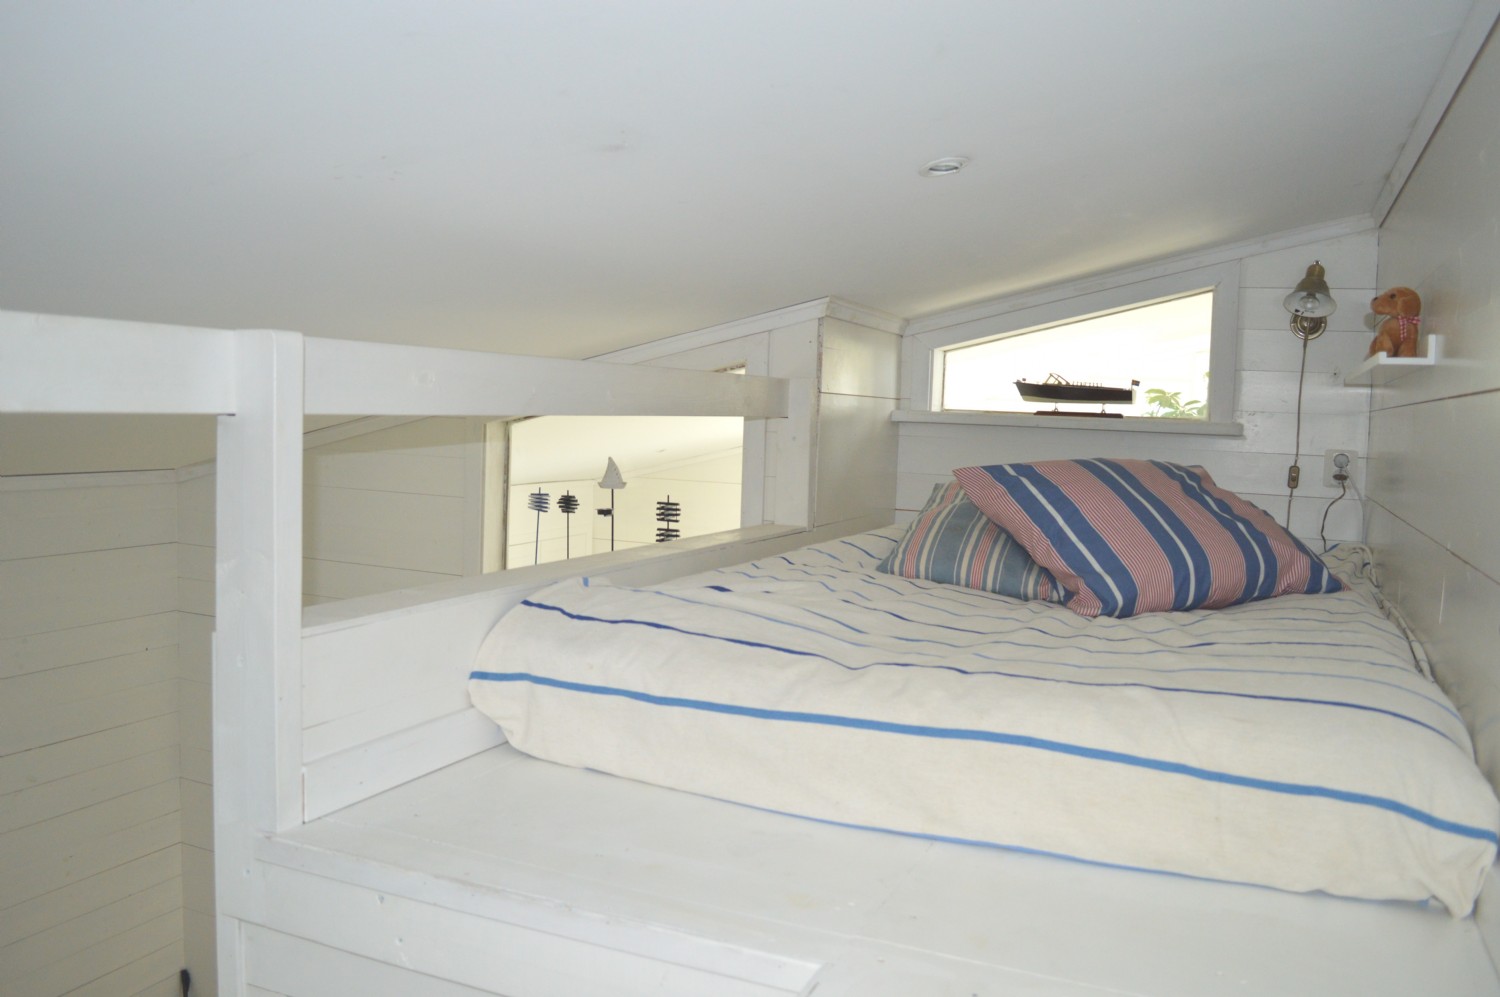 Sovrum 2 loft bdd/ Bed room 2 loft bed 